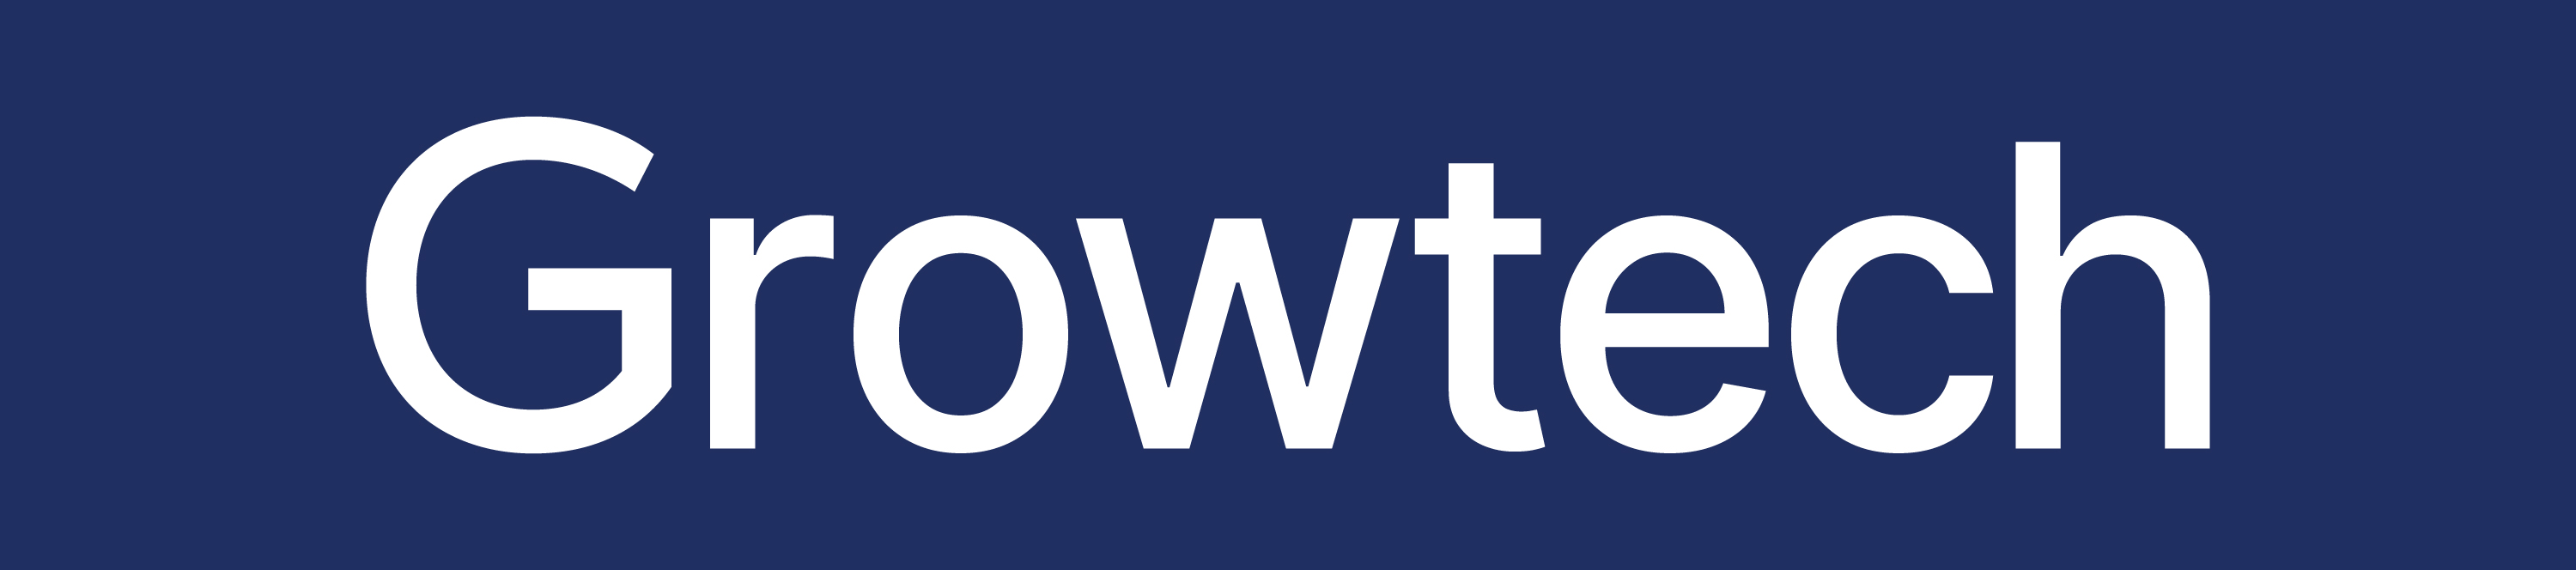 
			Growtech-logo
		